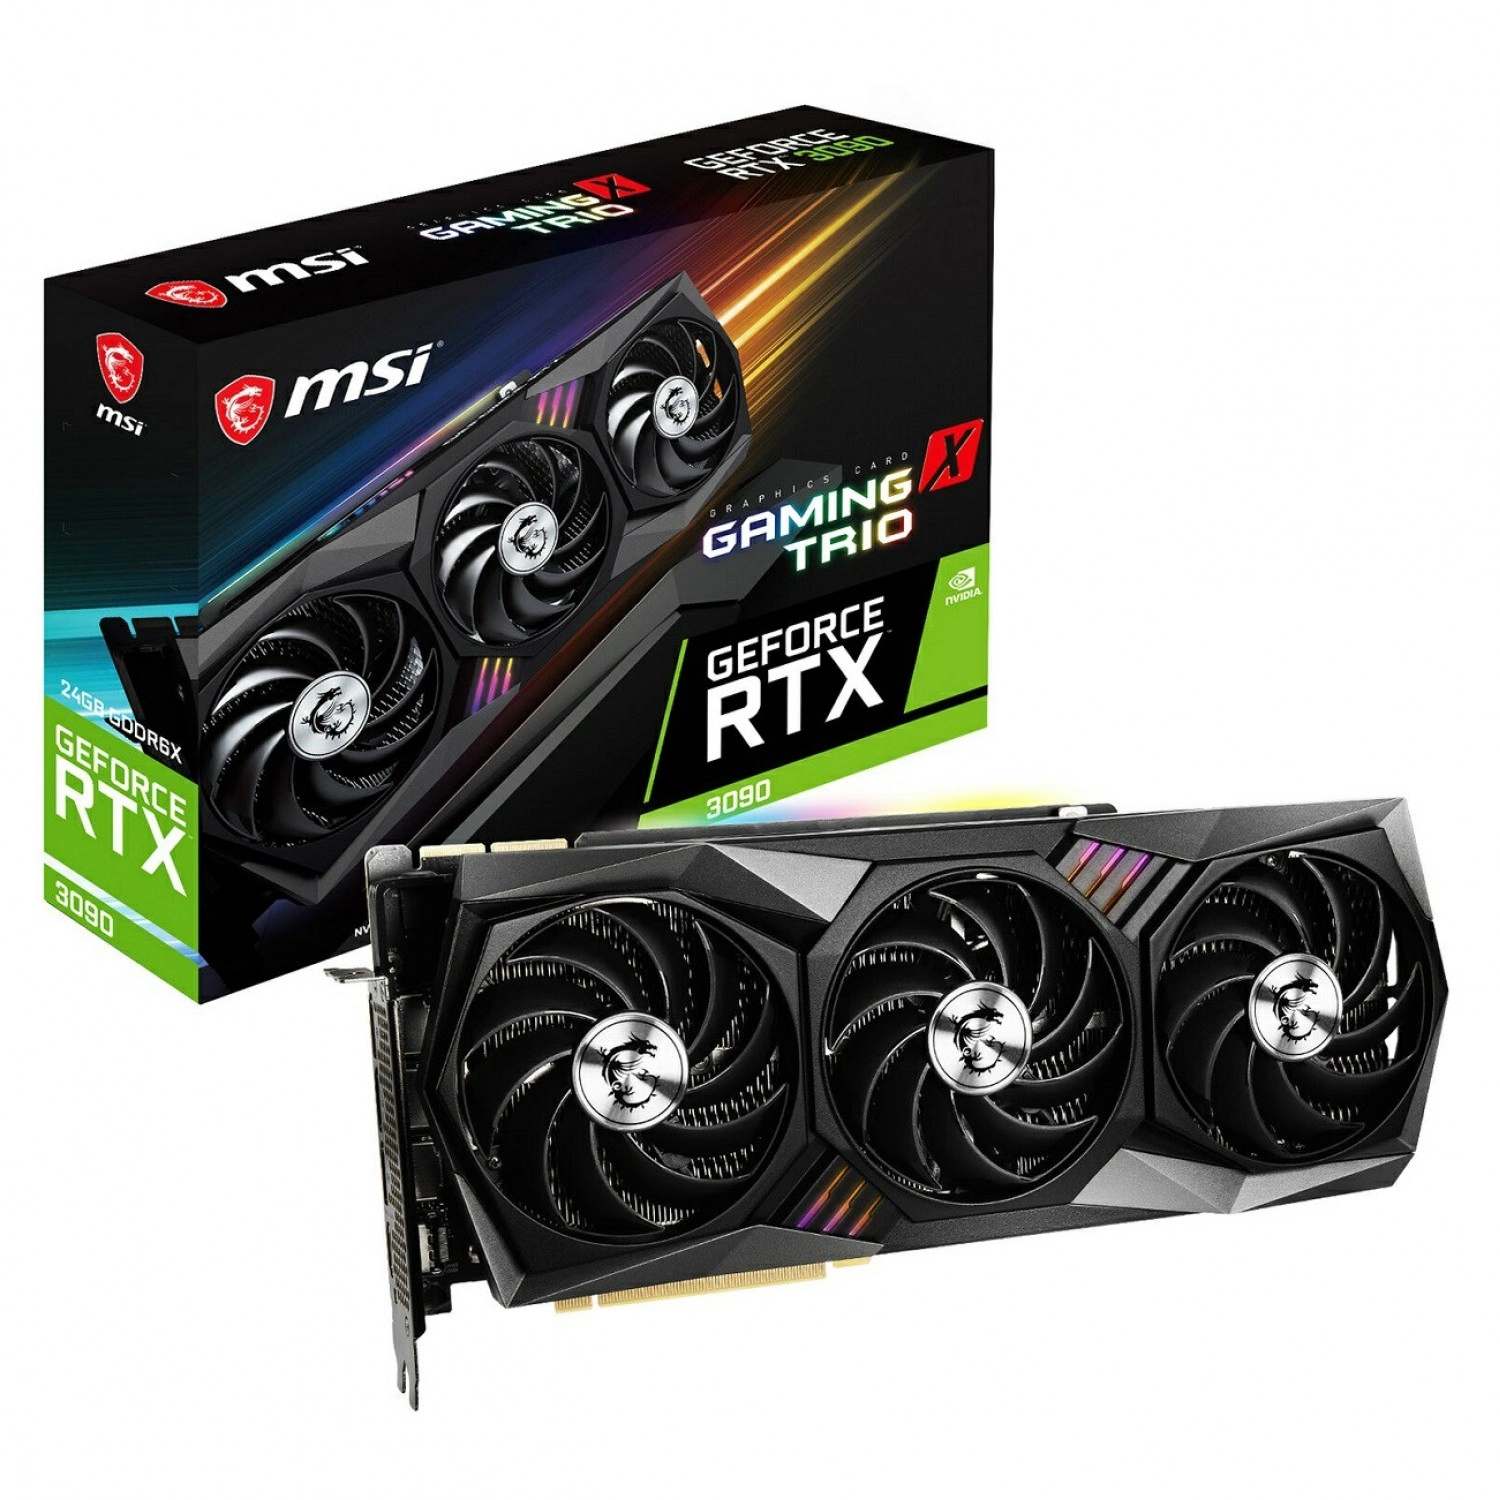 MSI GeForce RTX 3090 GAMING X TRIO 24G Package